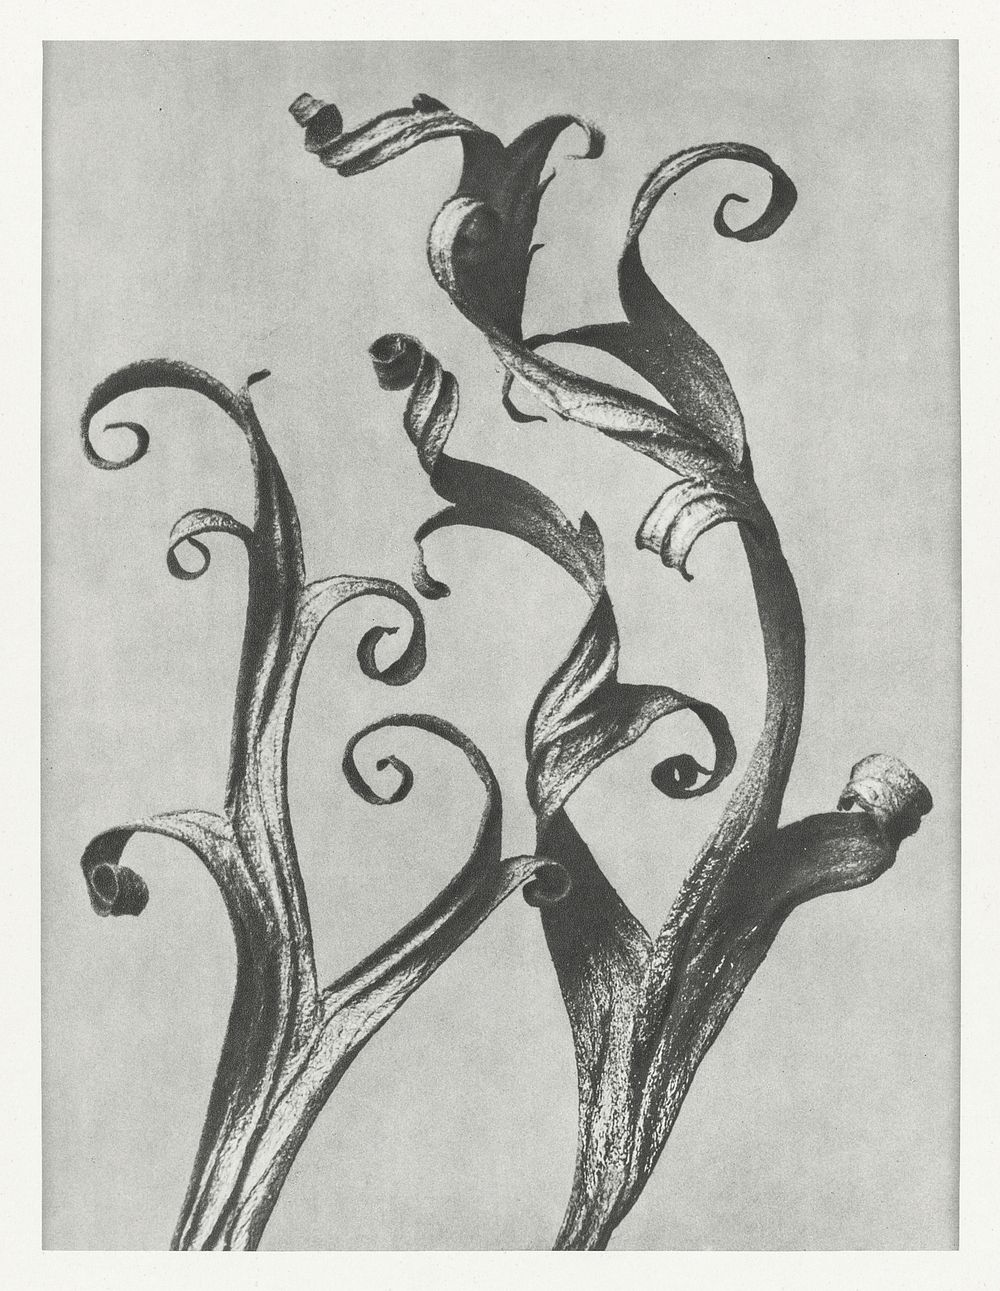 Delphinium (Larkspur Leaves) enlarged 6 times from Urformen der Kunst (1928) by Karl Blossfeldt. Original from The…